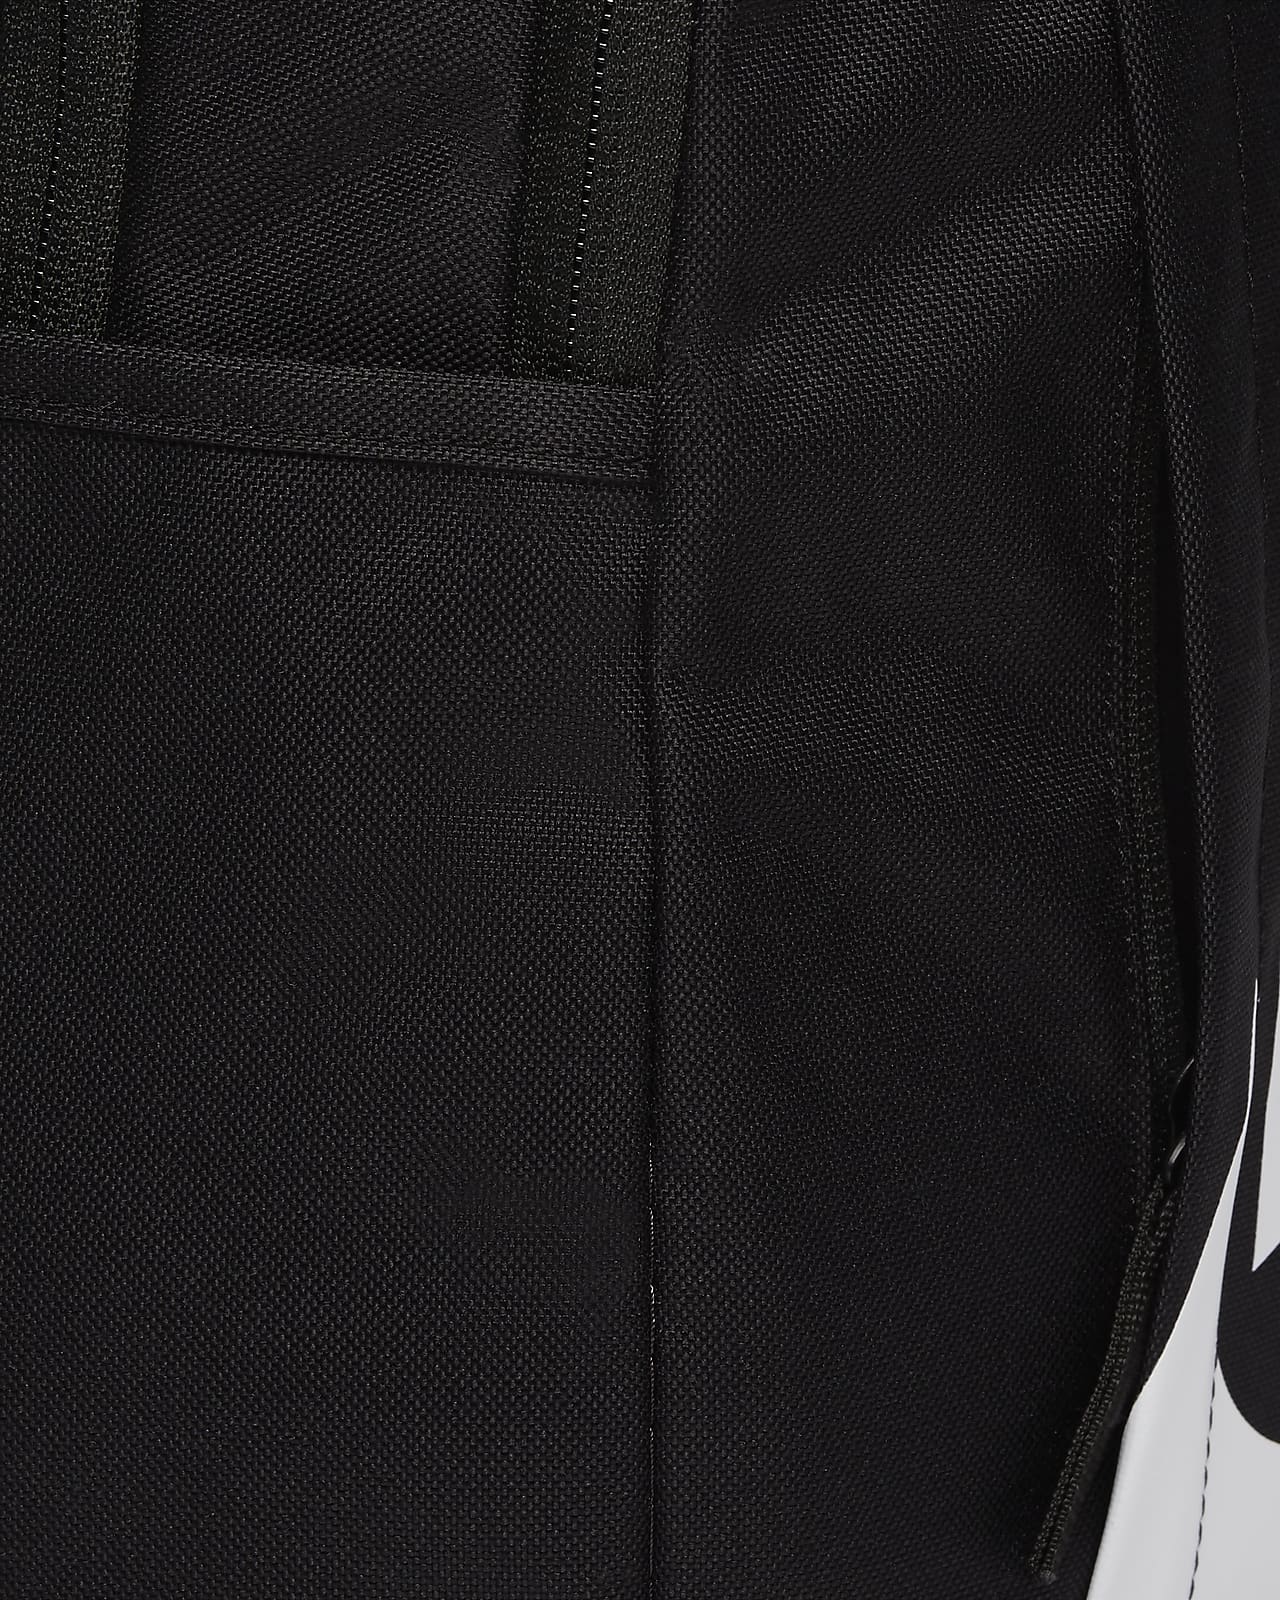 nike sportswear elemental backpack black